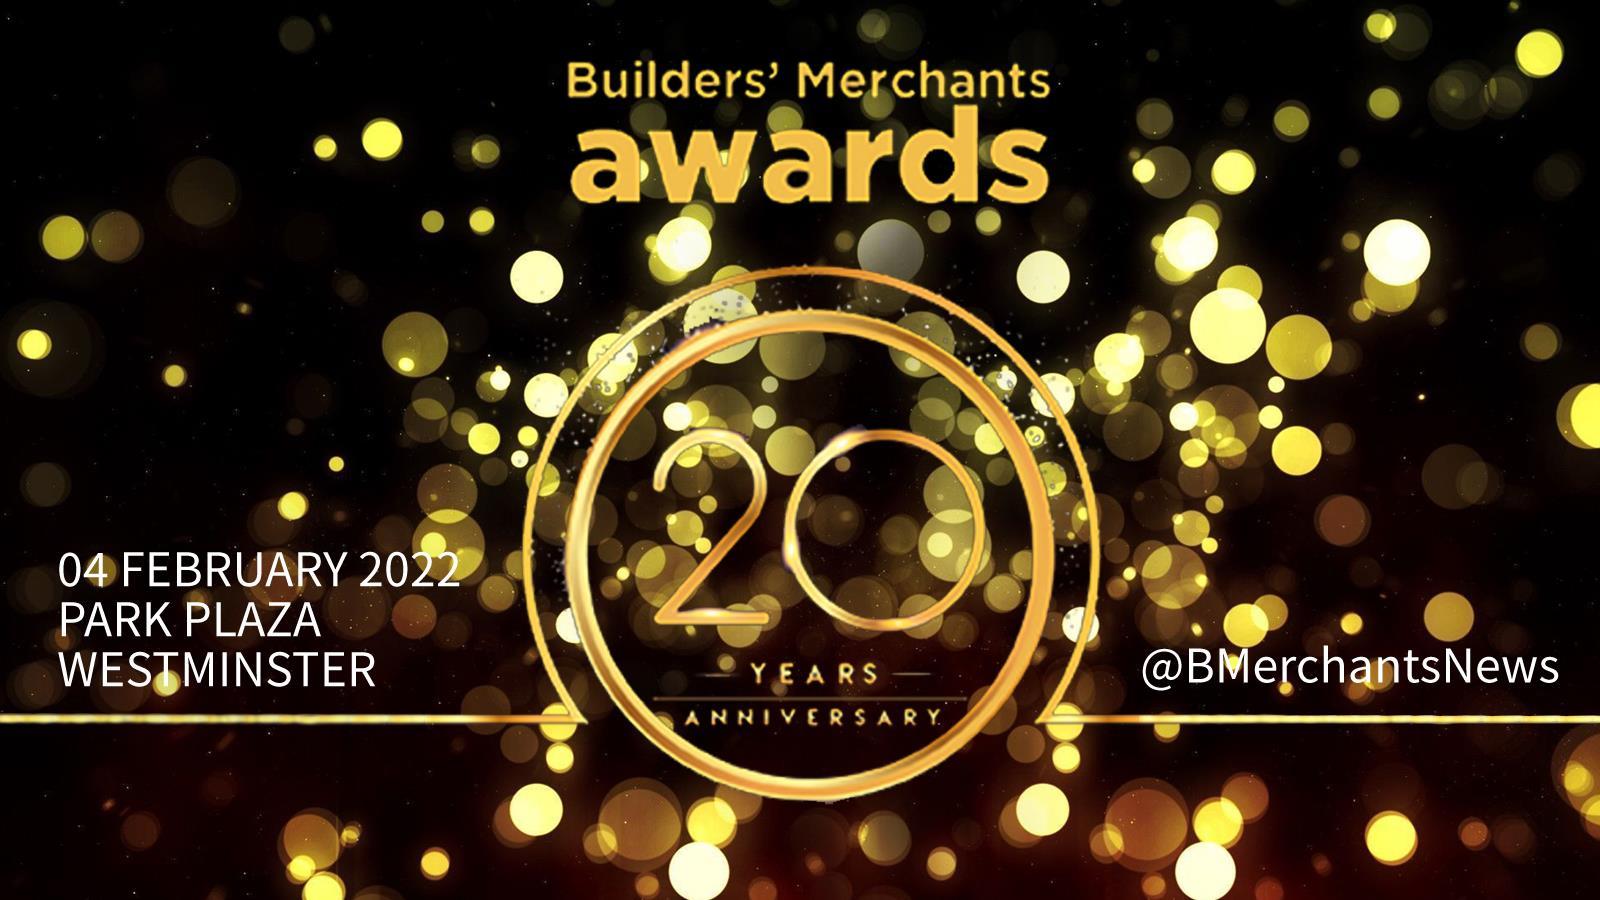 Builder's Merchants awards 20th Anniversary image